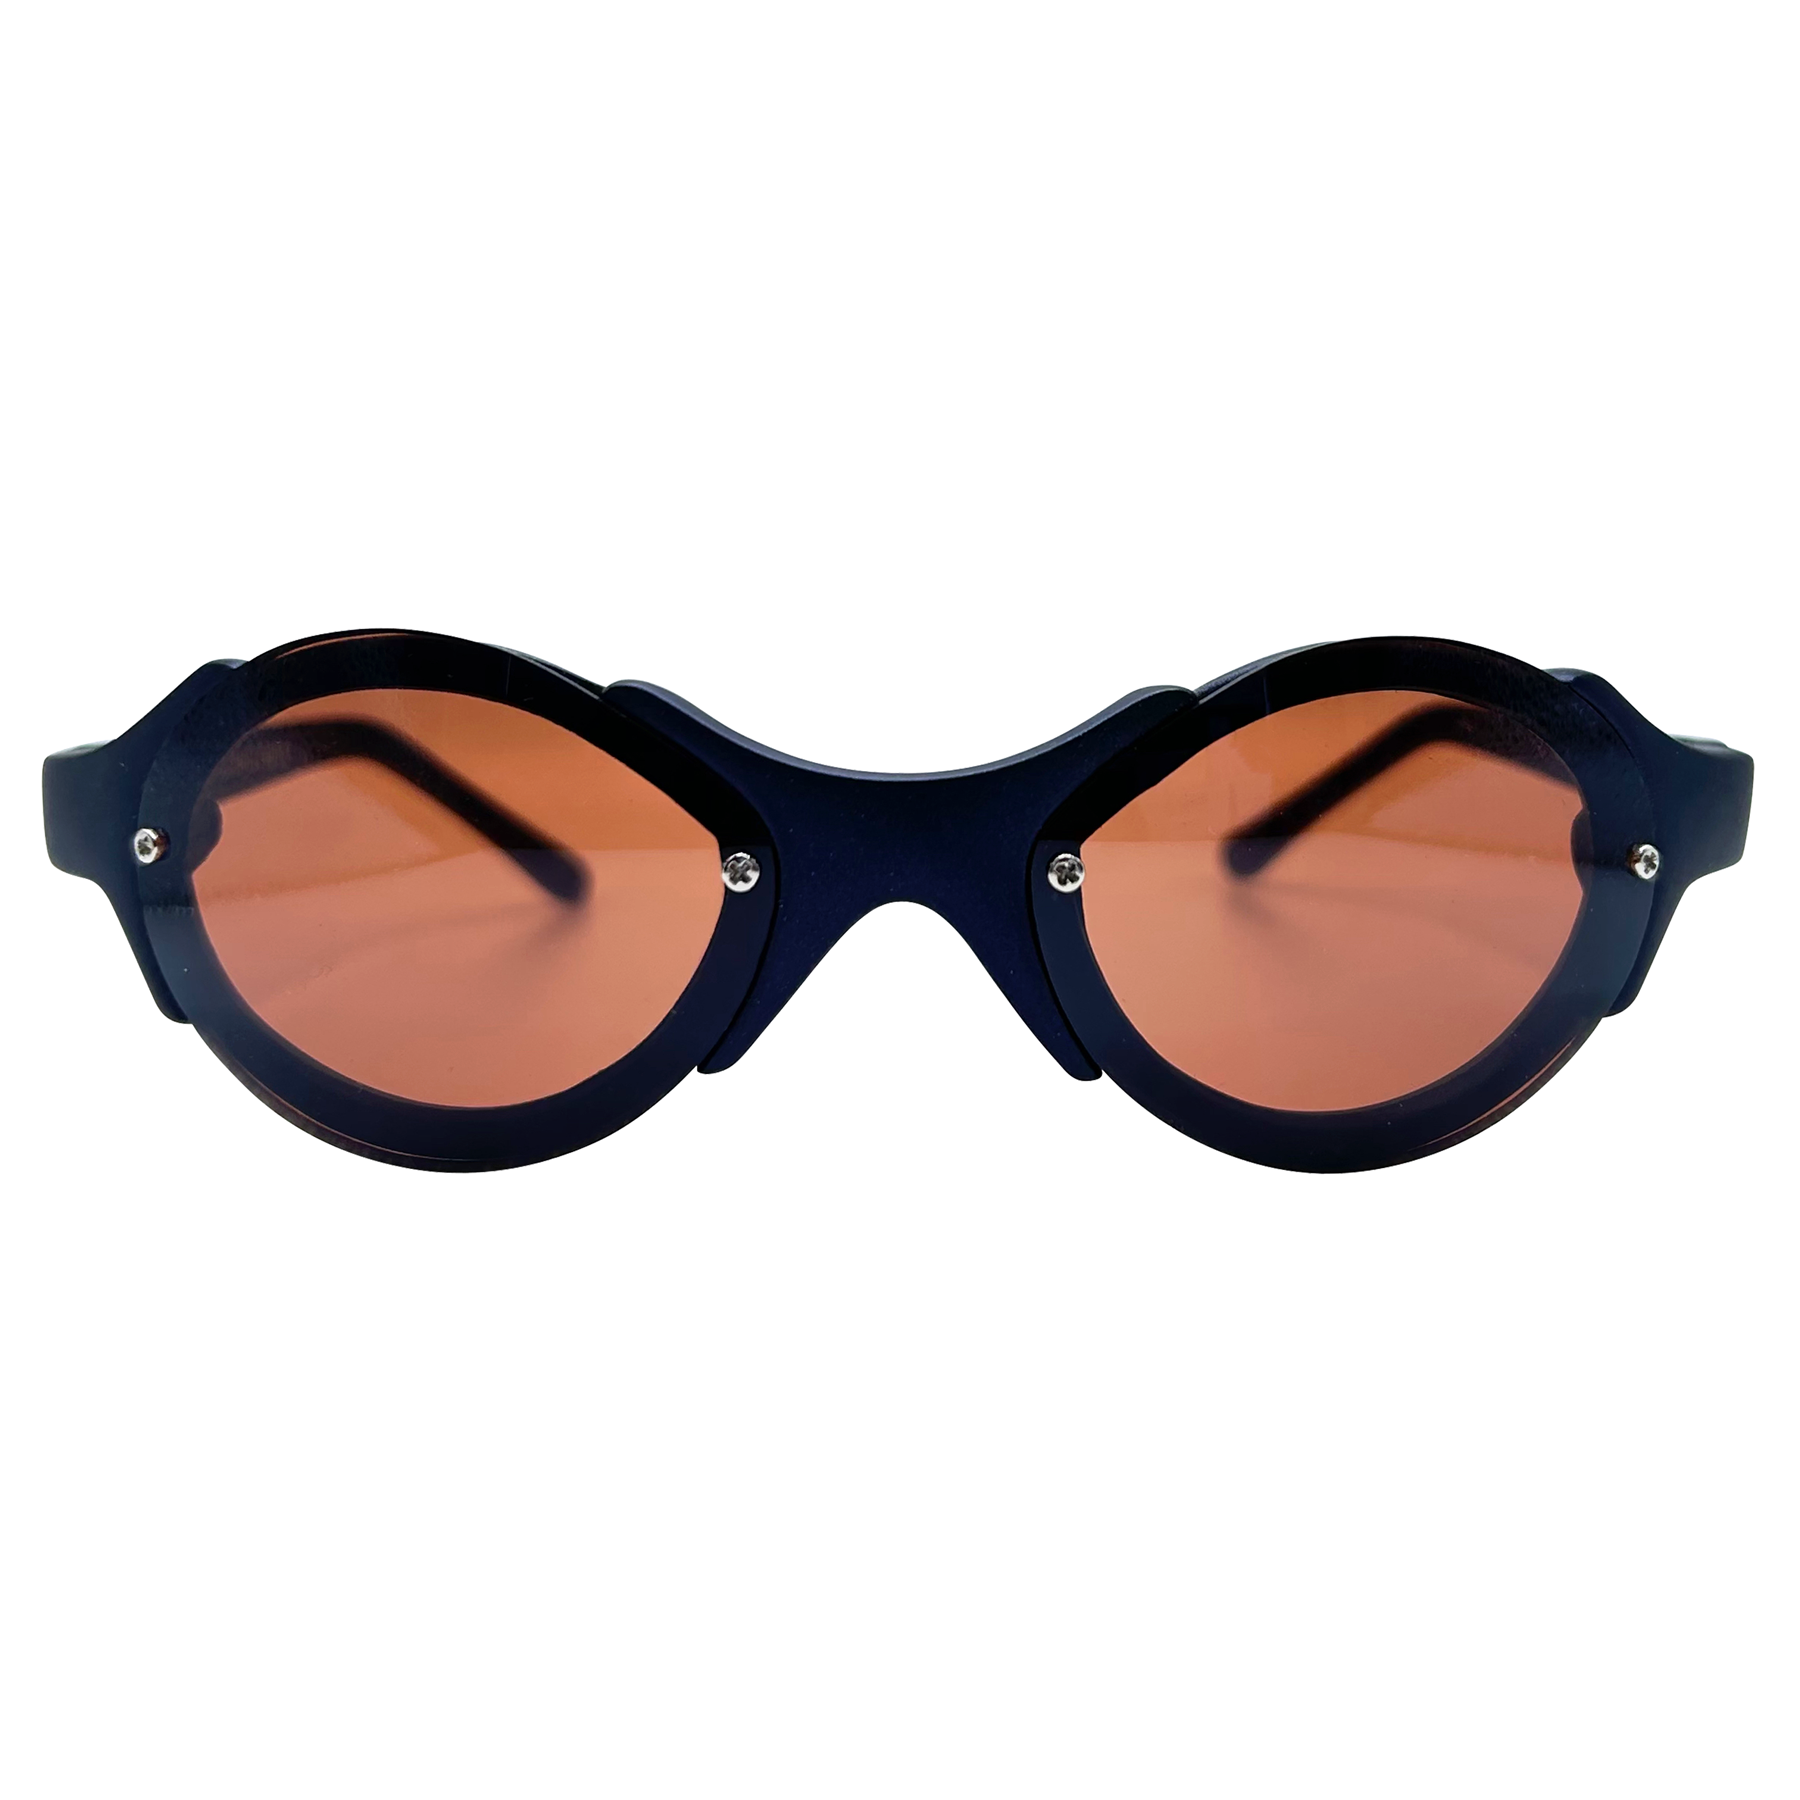 BEEP Micro Round Sports Sunglasses